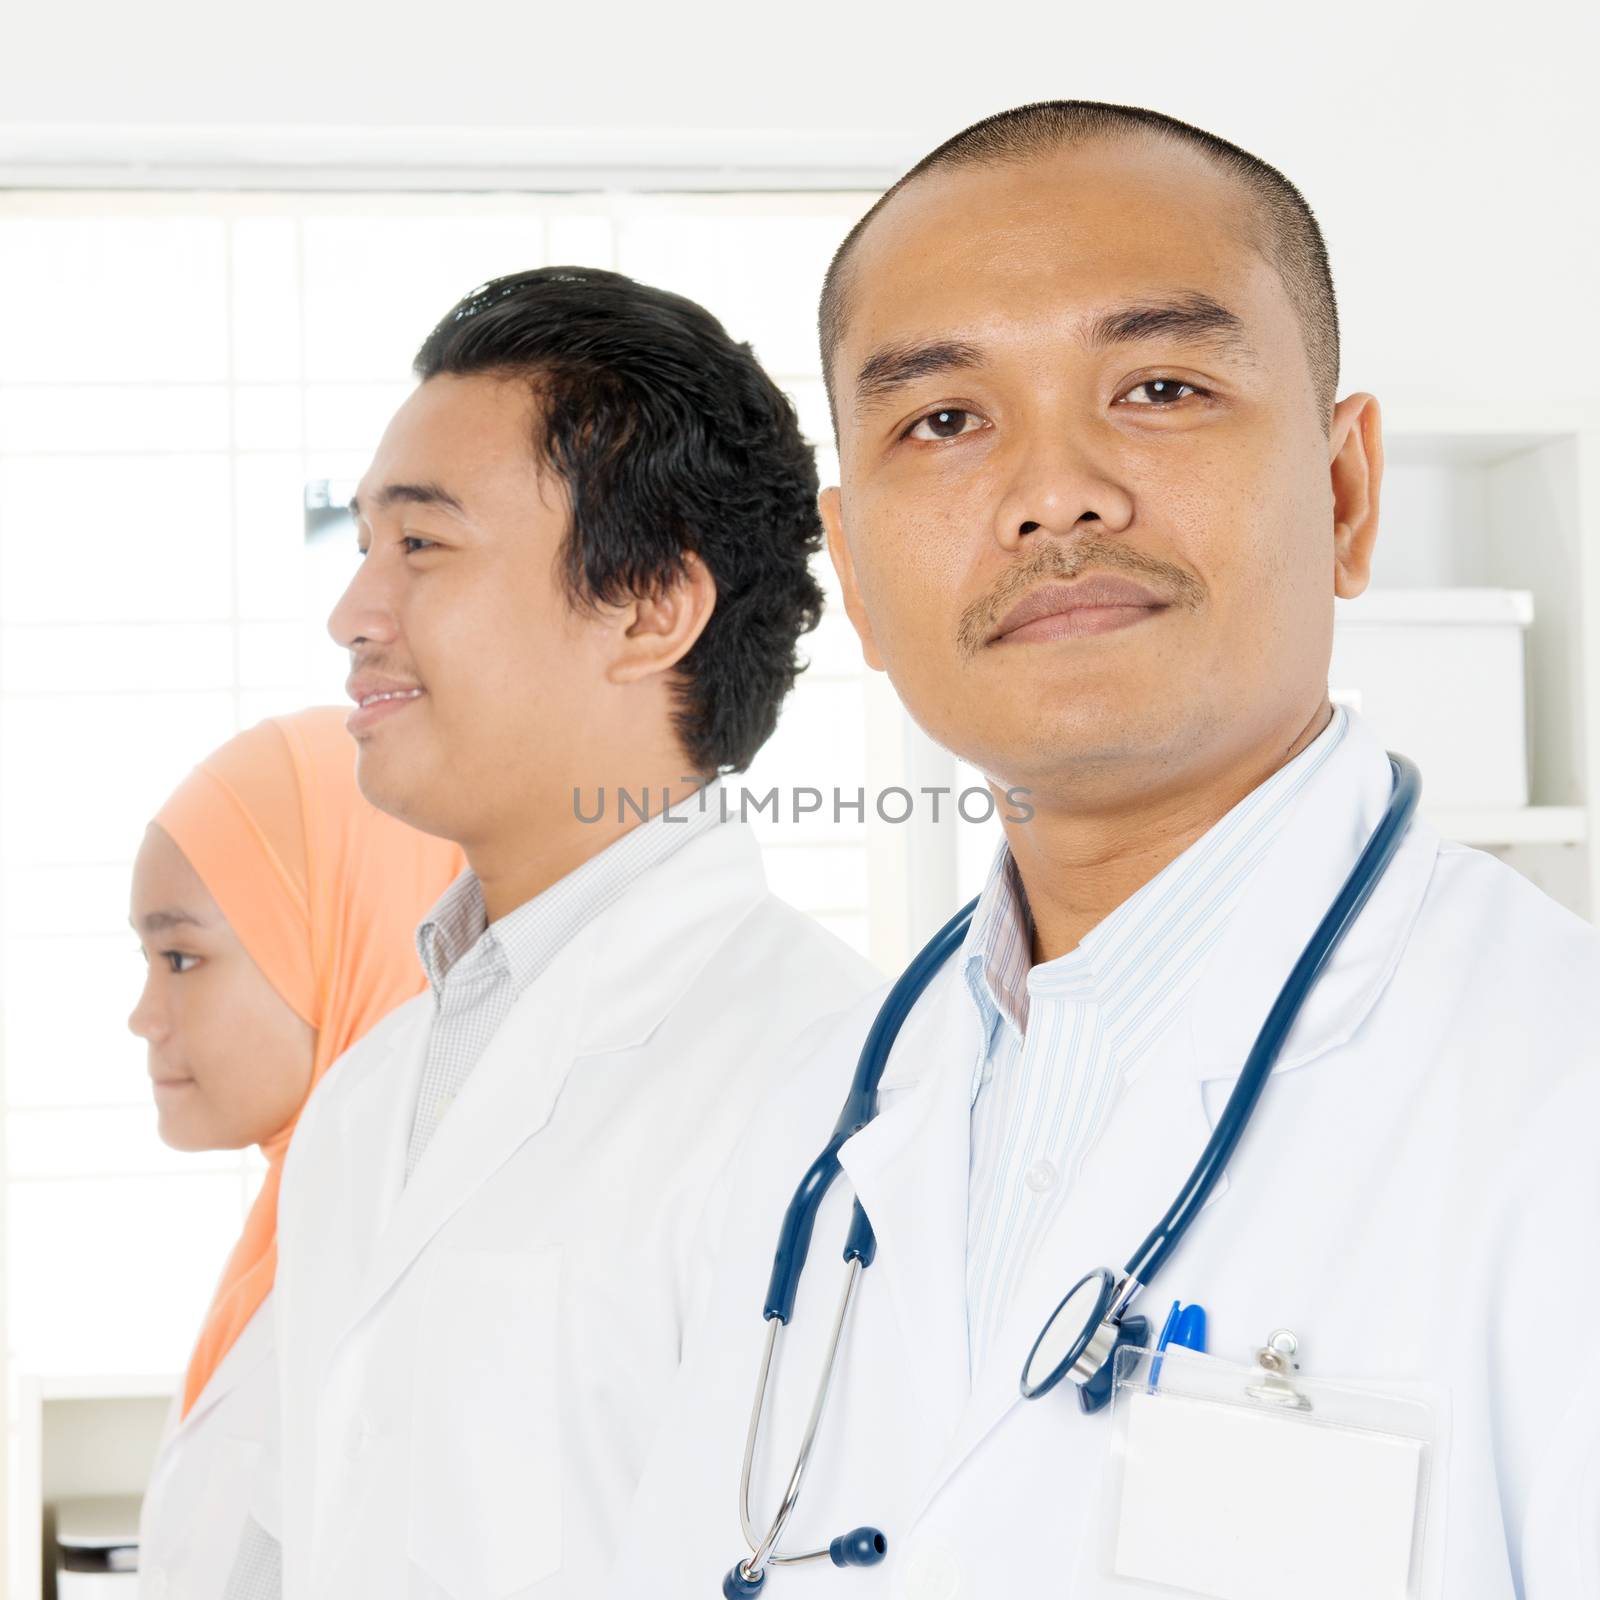 Asian doctors portrait by szefei